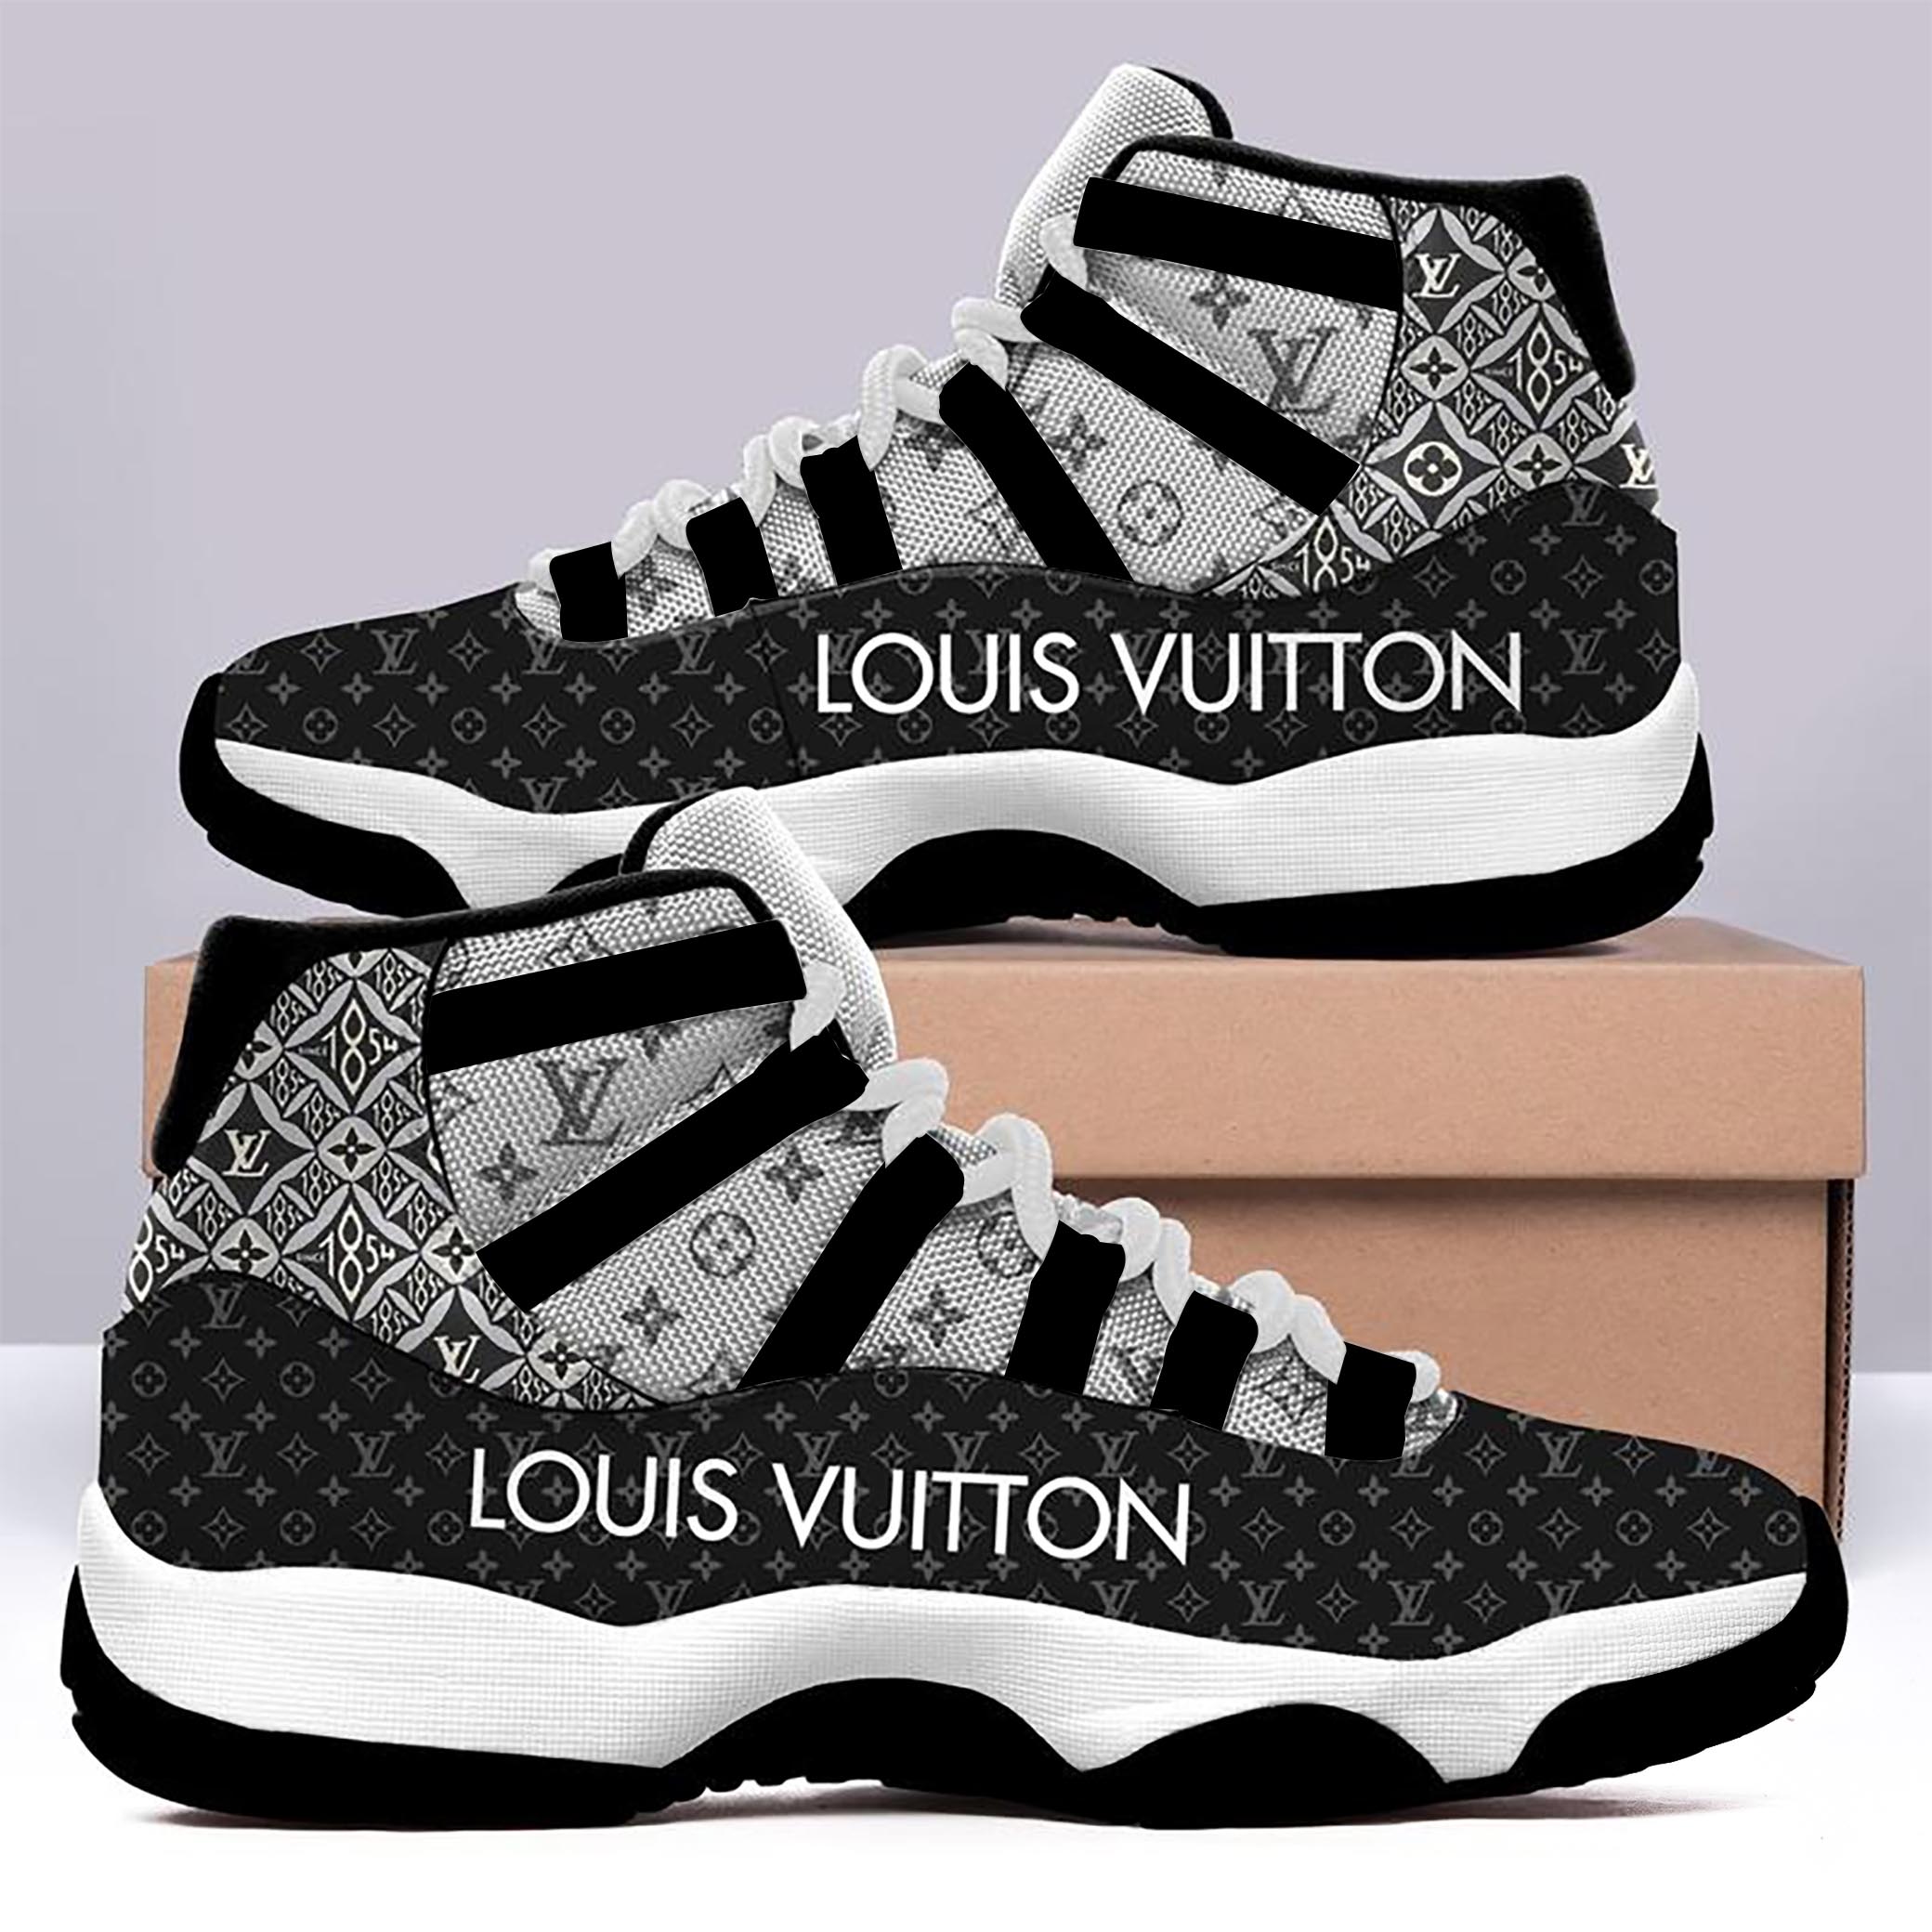 Louis Vuitton Air Jordan 11 Sneakers Shoes Hot 2022 LV Grey Gifts For Men Women HT